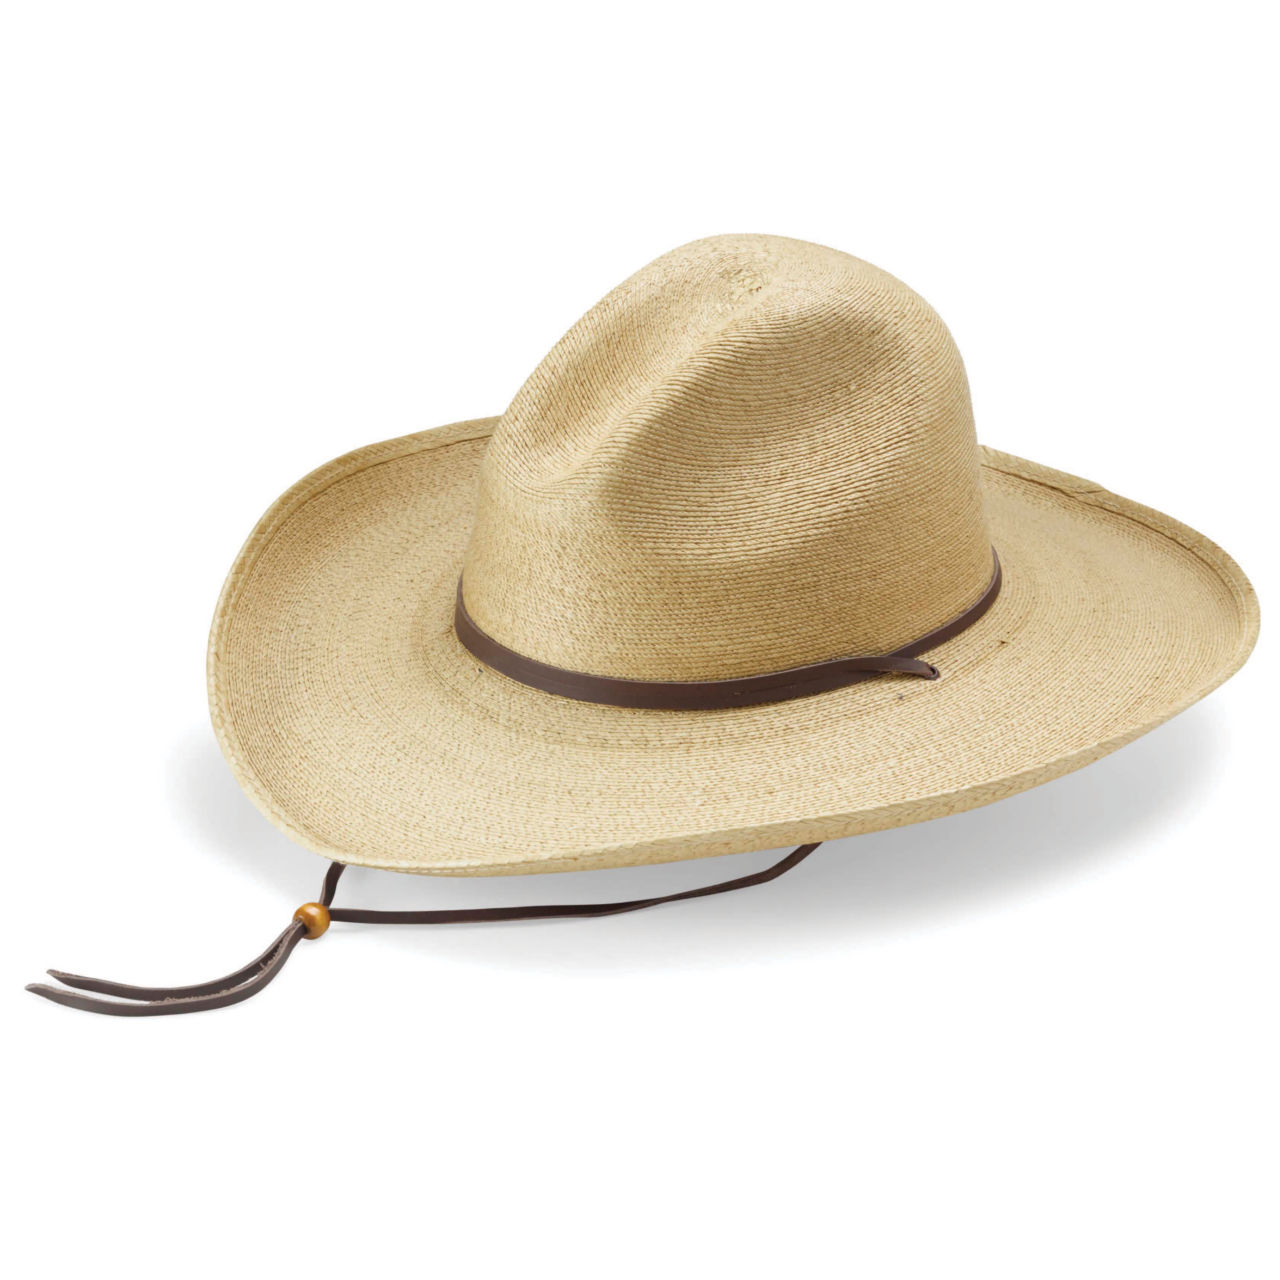 Stetson Cowboy Hat - NATURAL image number 0